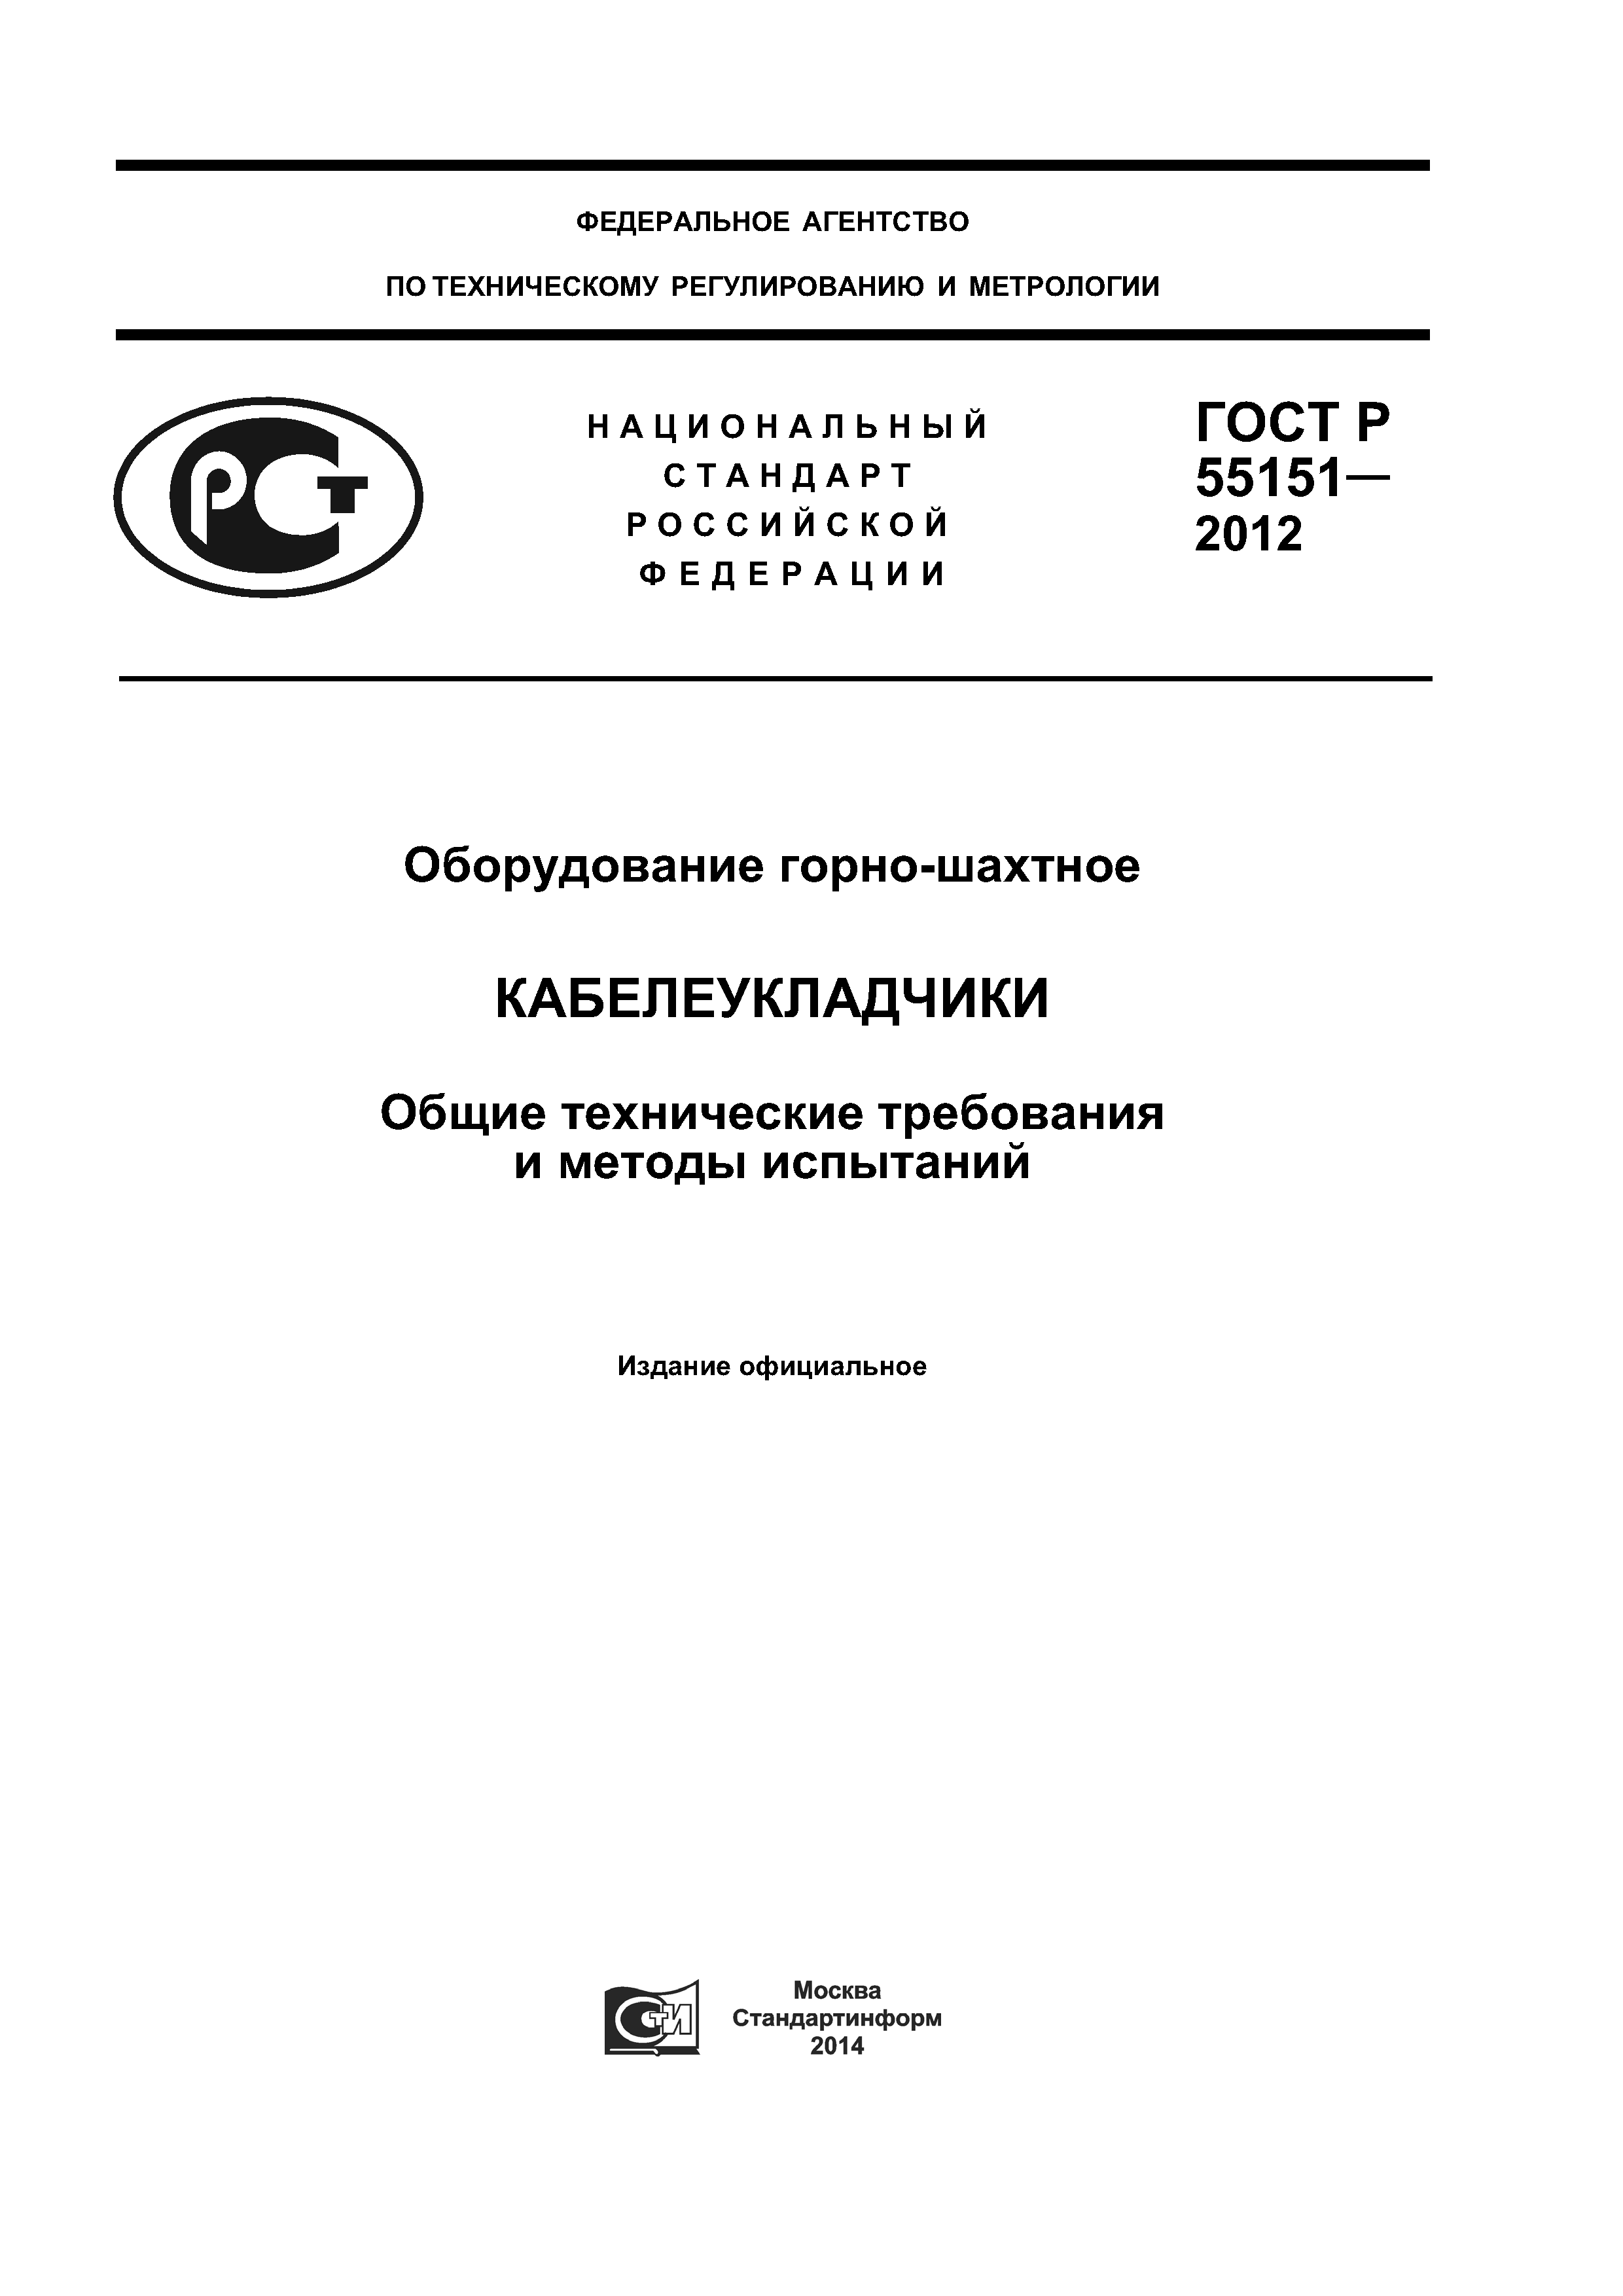 ГОСТ Р 55151-2012